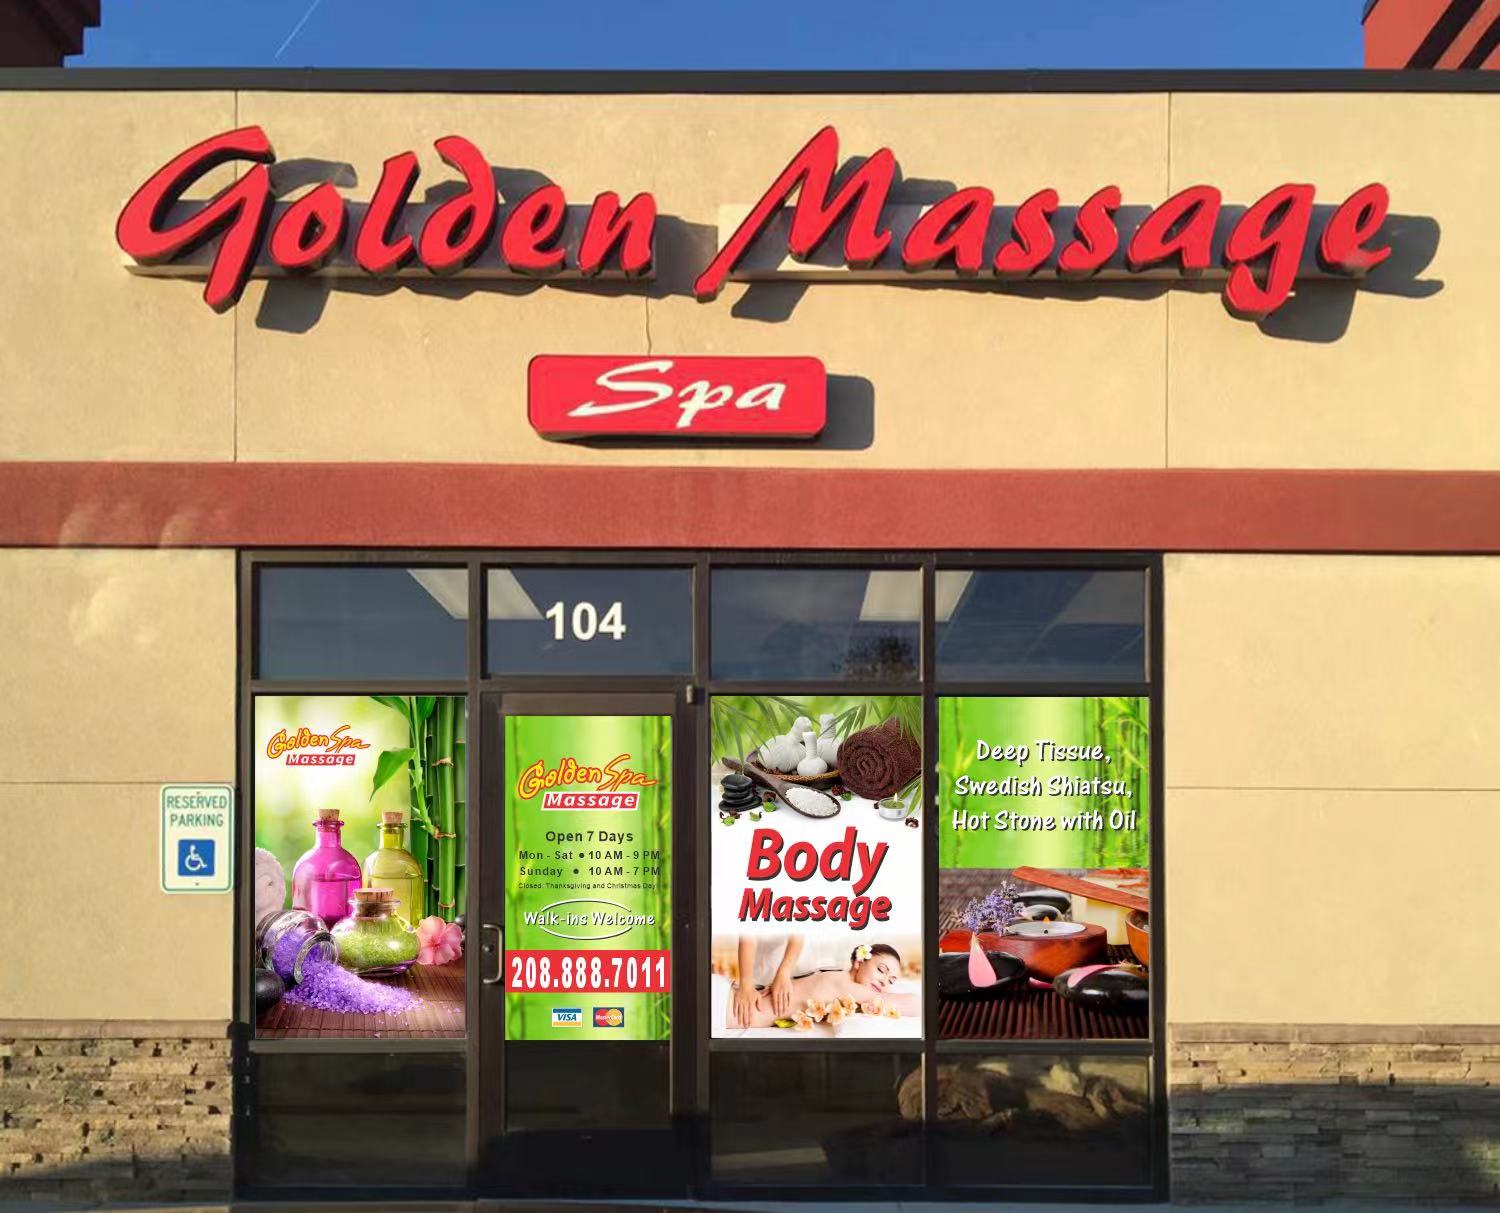 Golden Massage Spa Professional Massage Spa Meridian Id 83642